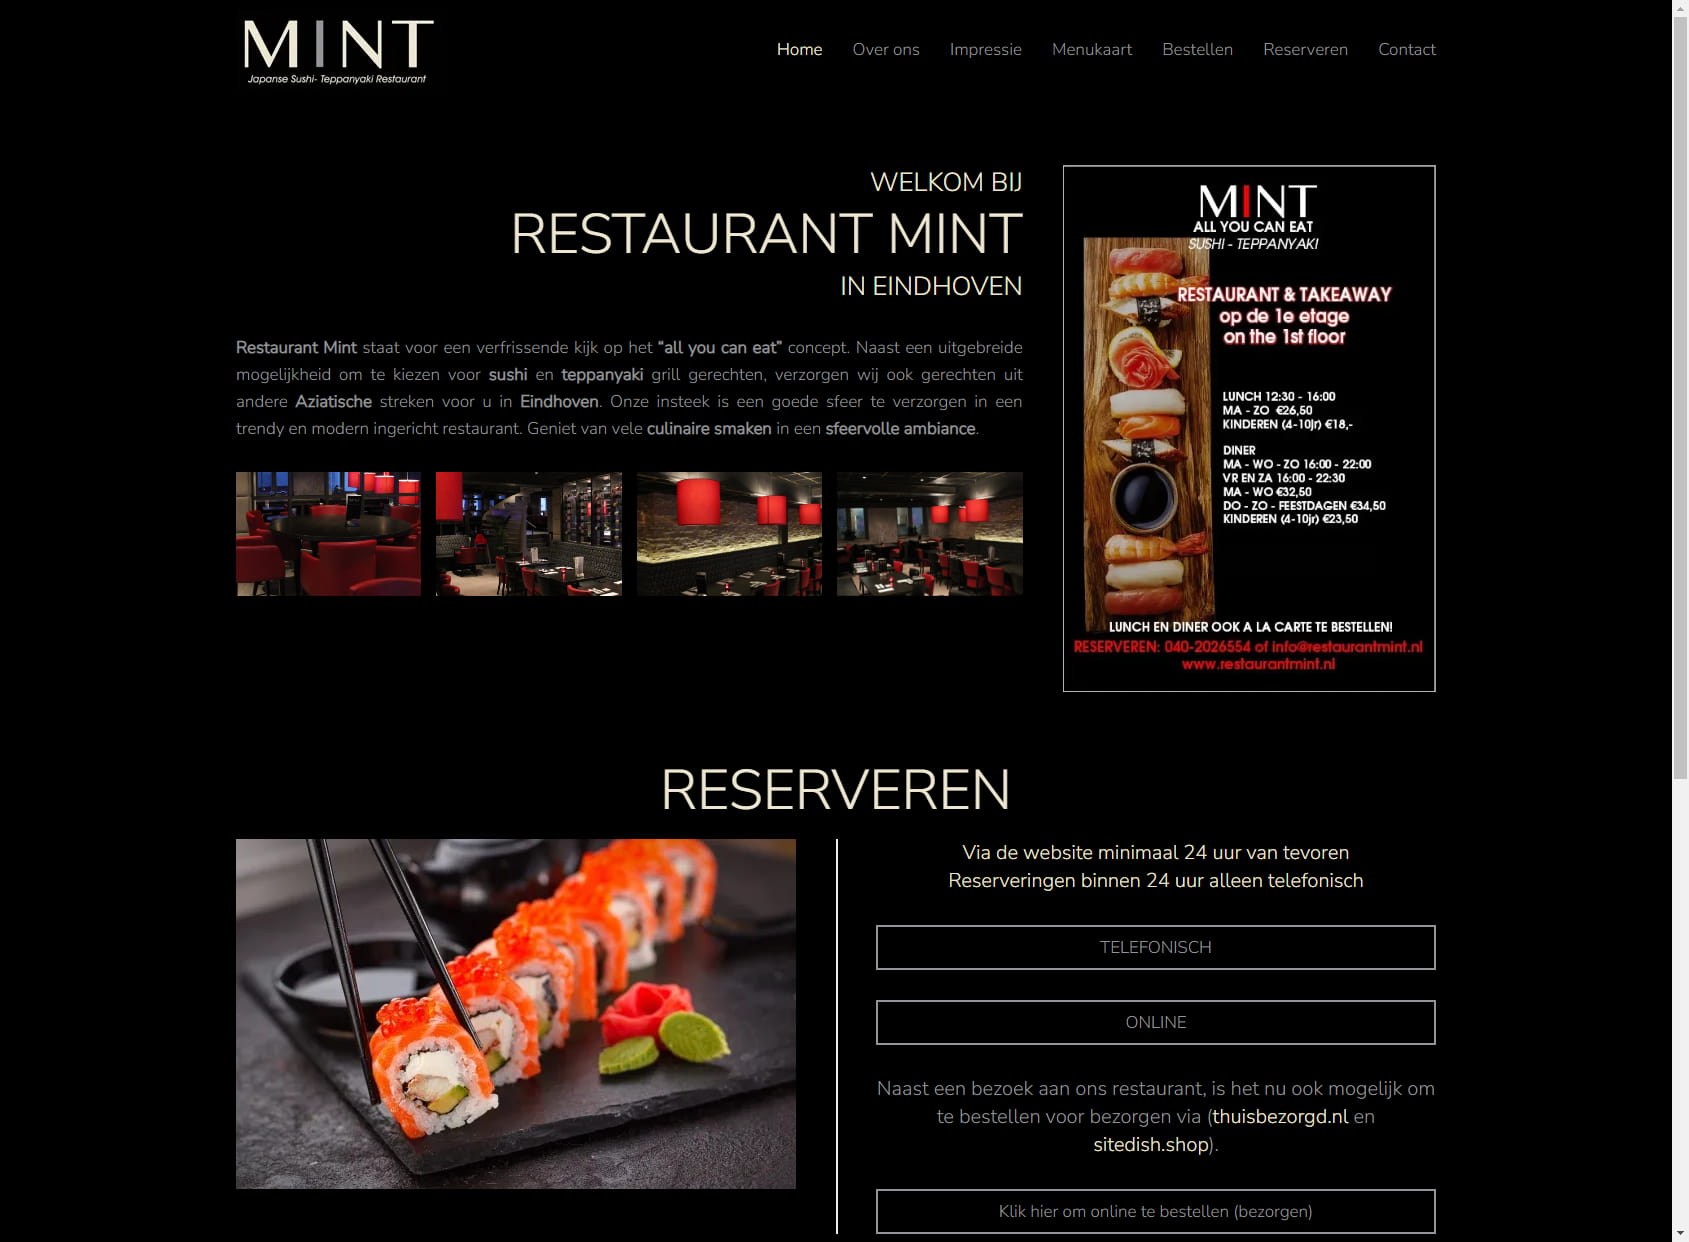 Restaurant Mint